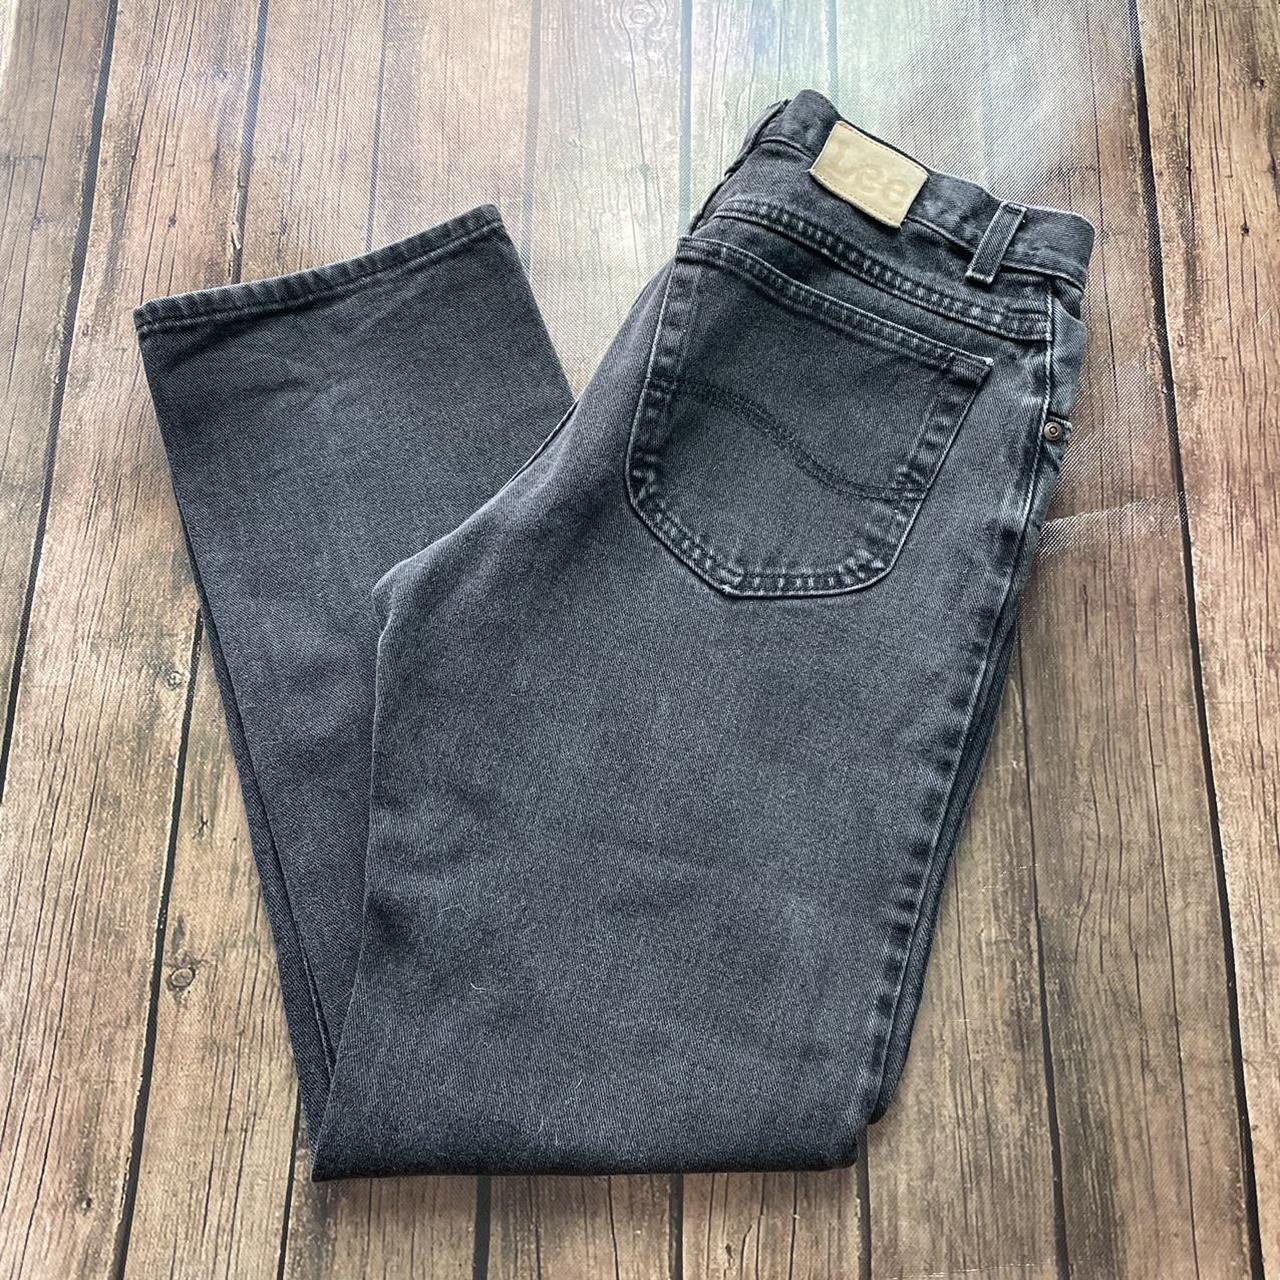 Lee Jeans black faded jeans size 33x30. H-40... - Depop